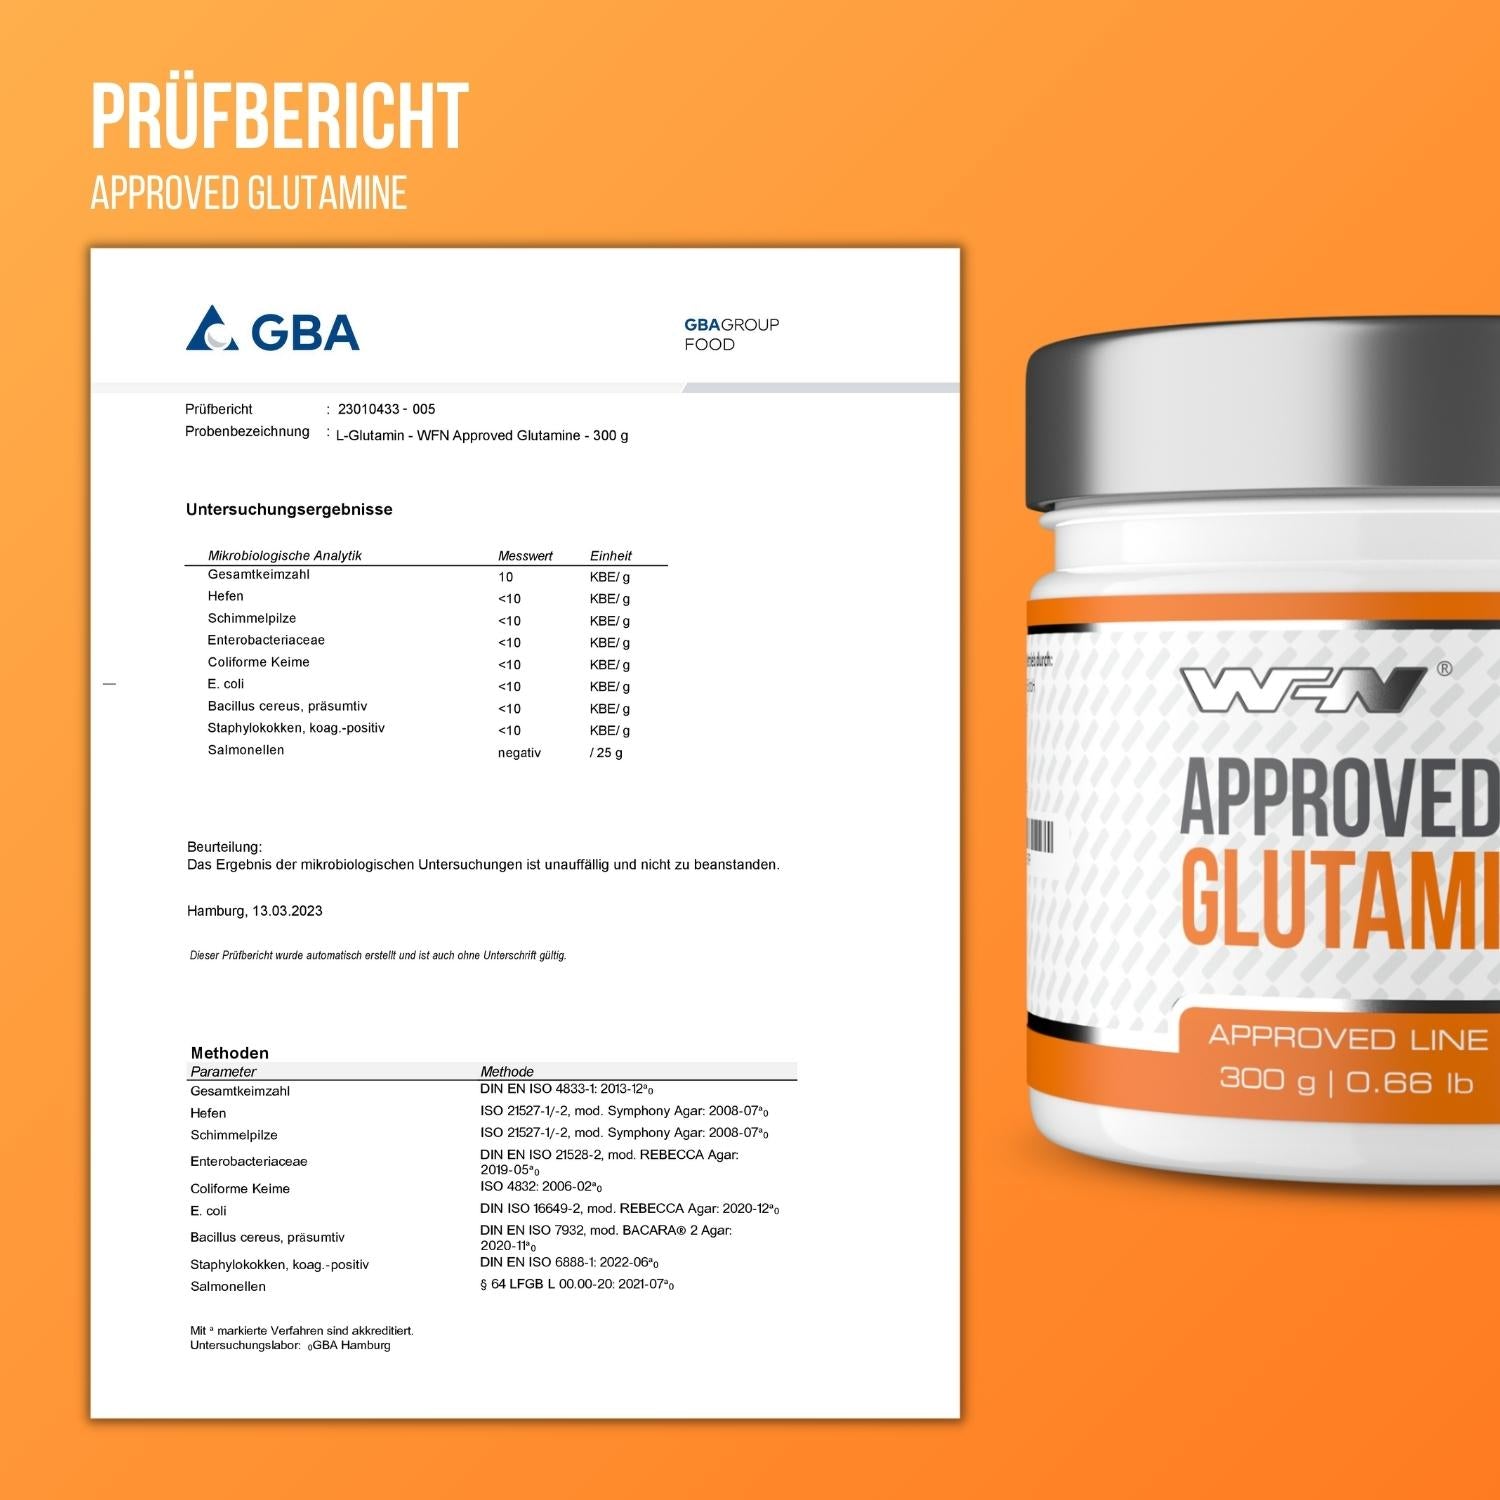 Approved Glutamine